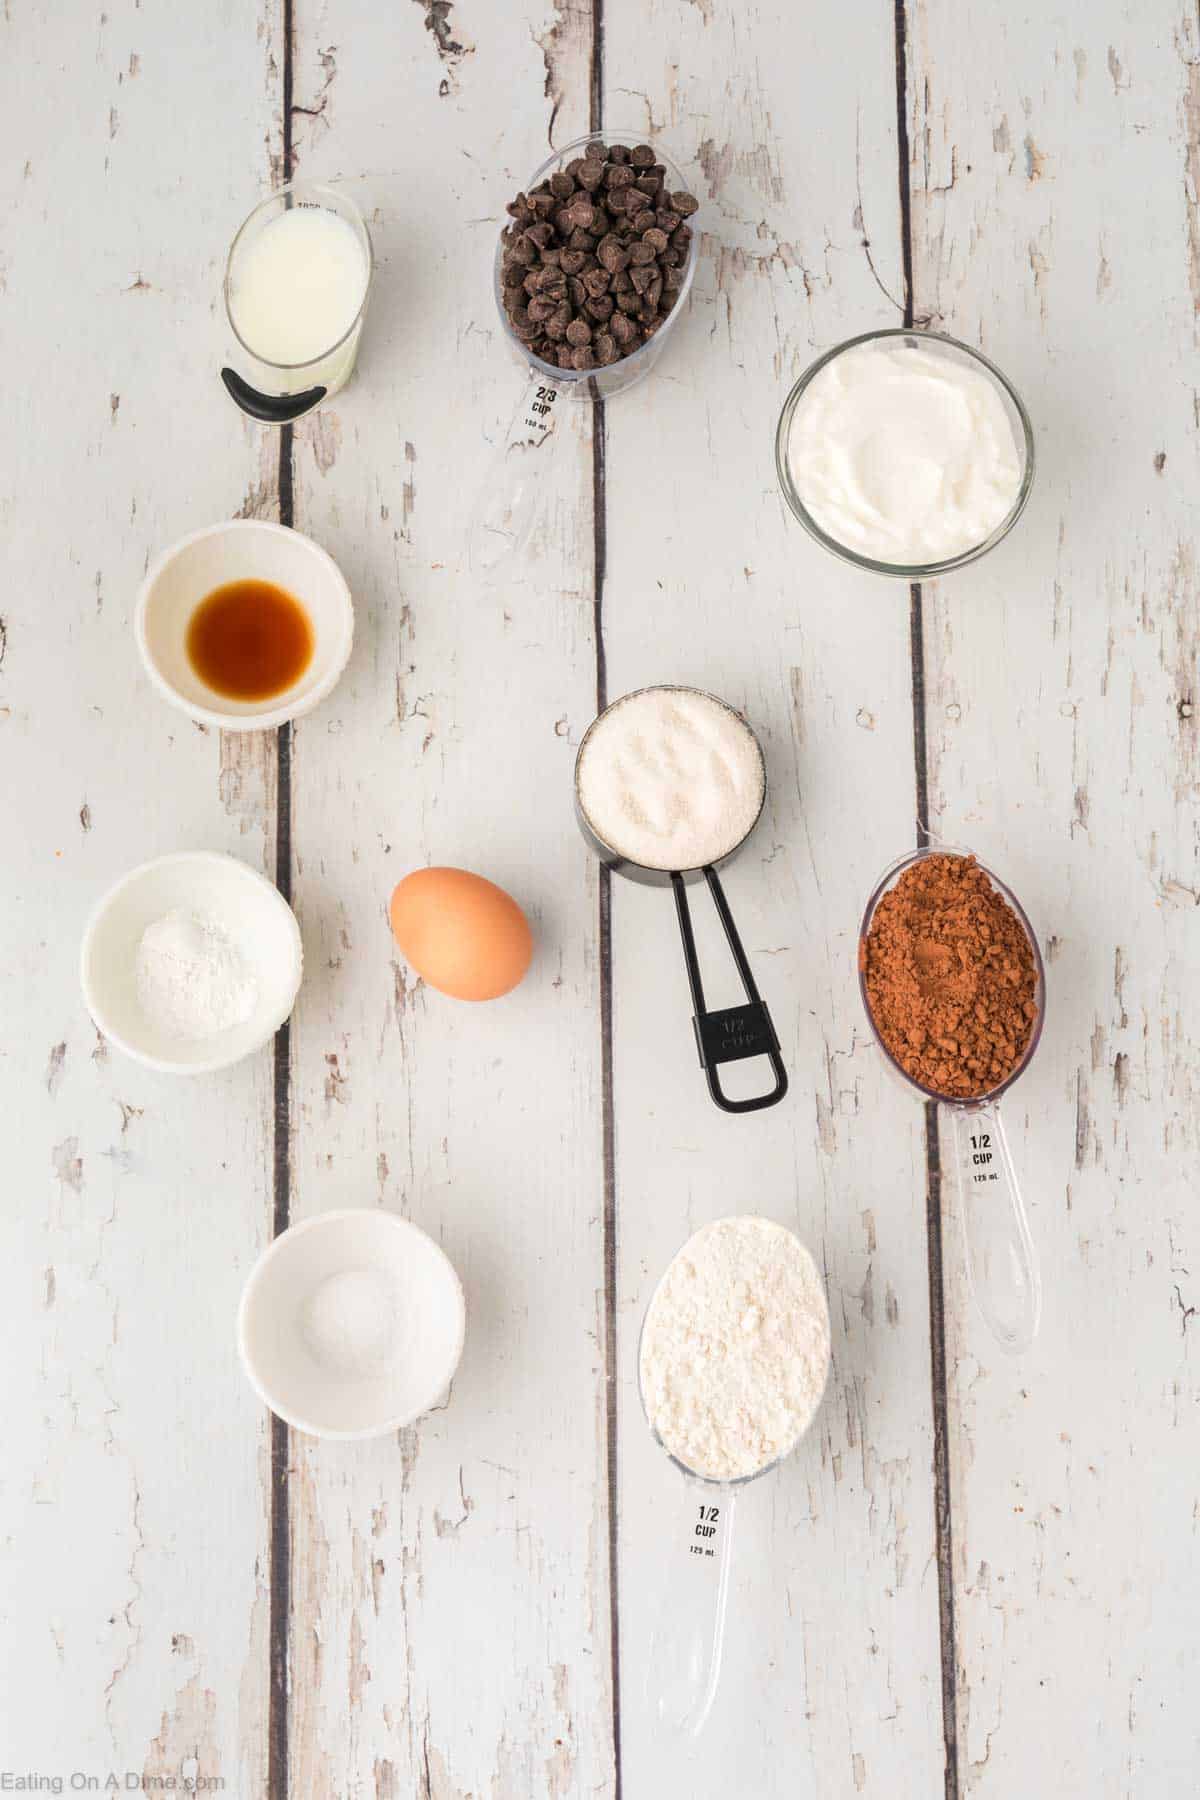 Low calorie brownies ingredients - flour, cocoa powder, baking powder, salt, erythritol, greek yogurt, egg, fat free milk, vanilla extract, chocolate chips